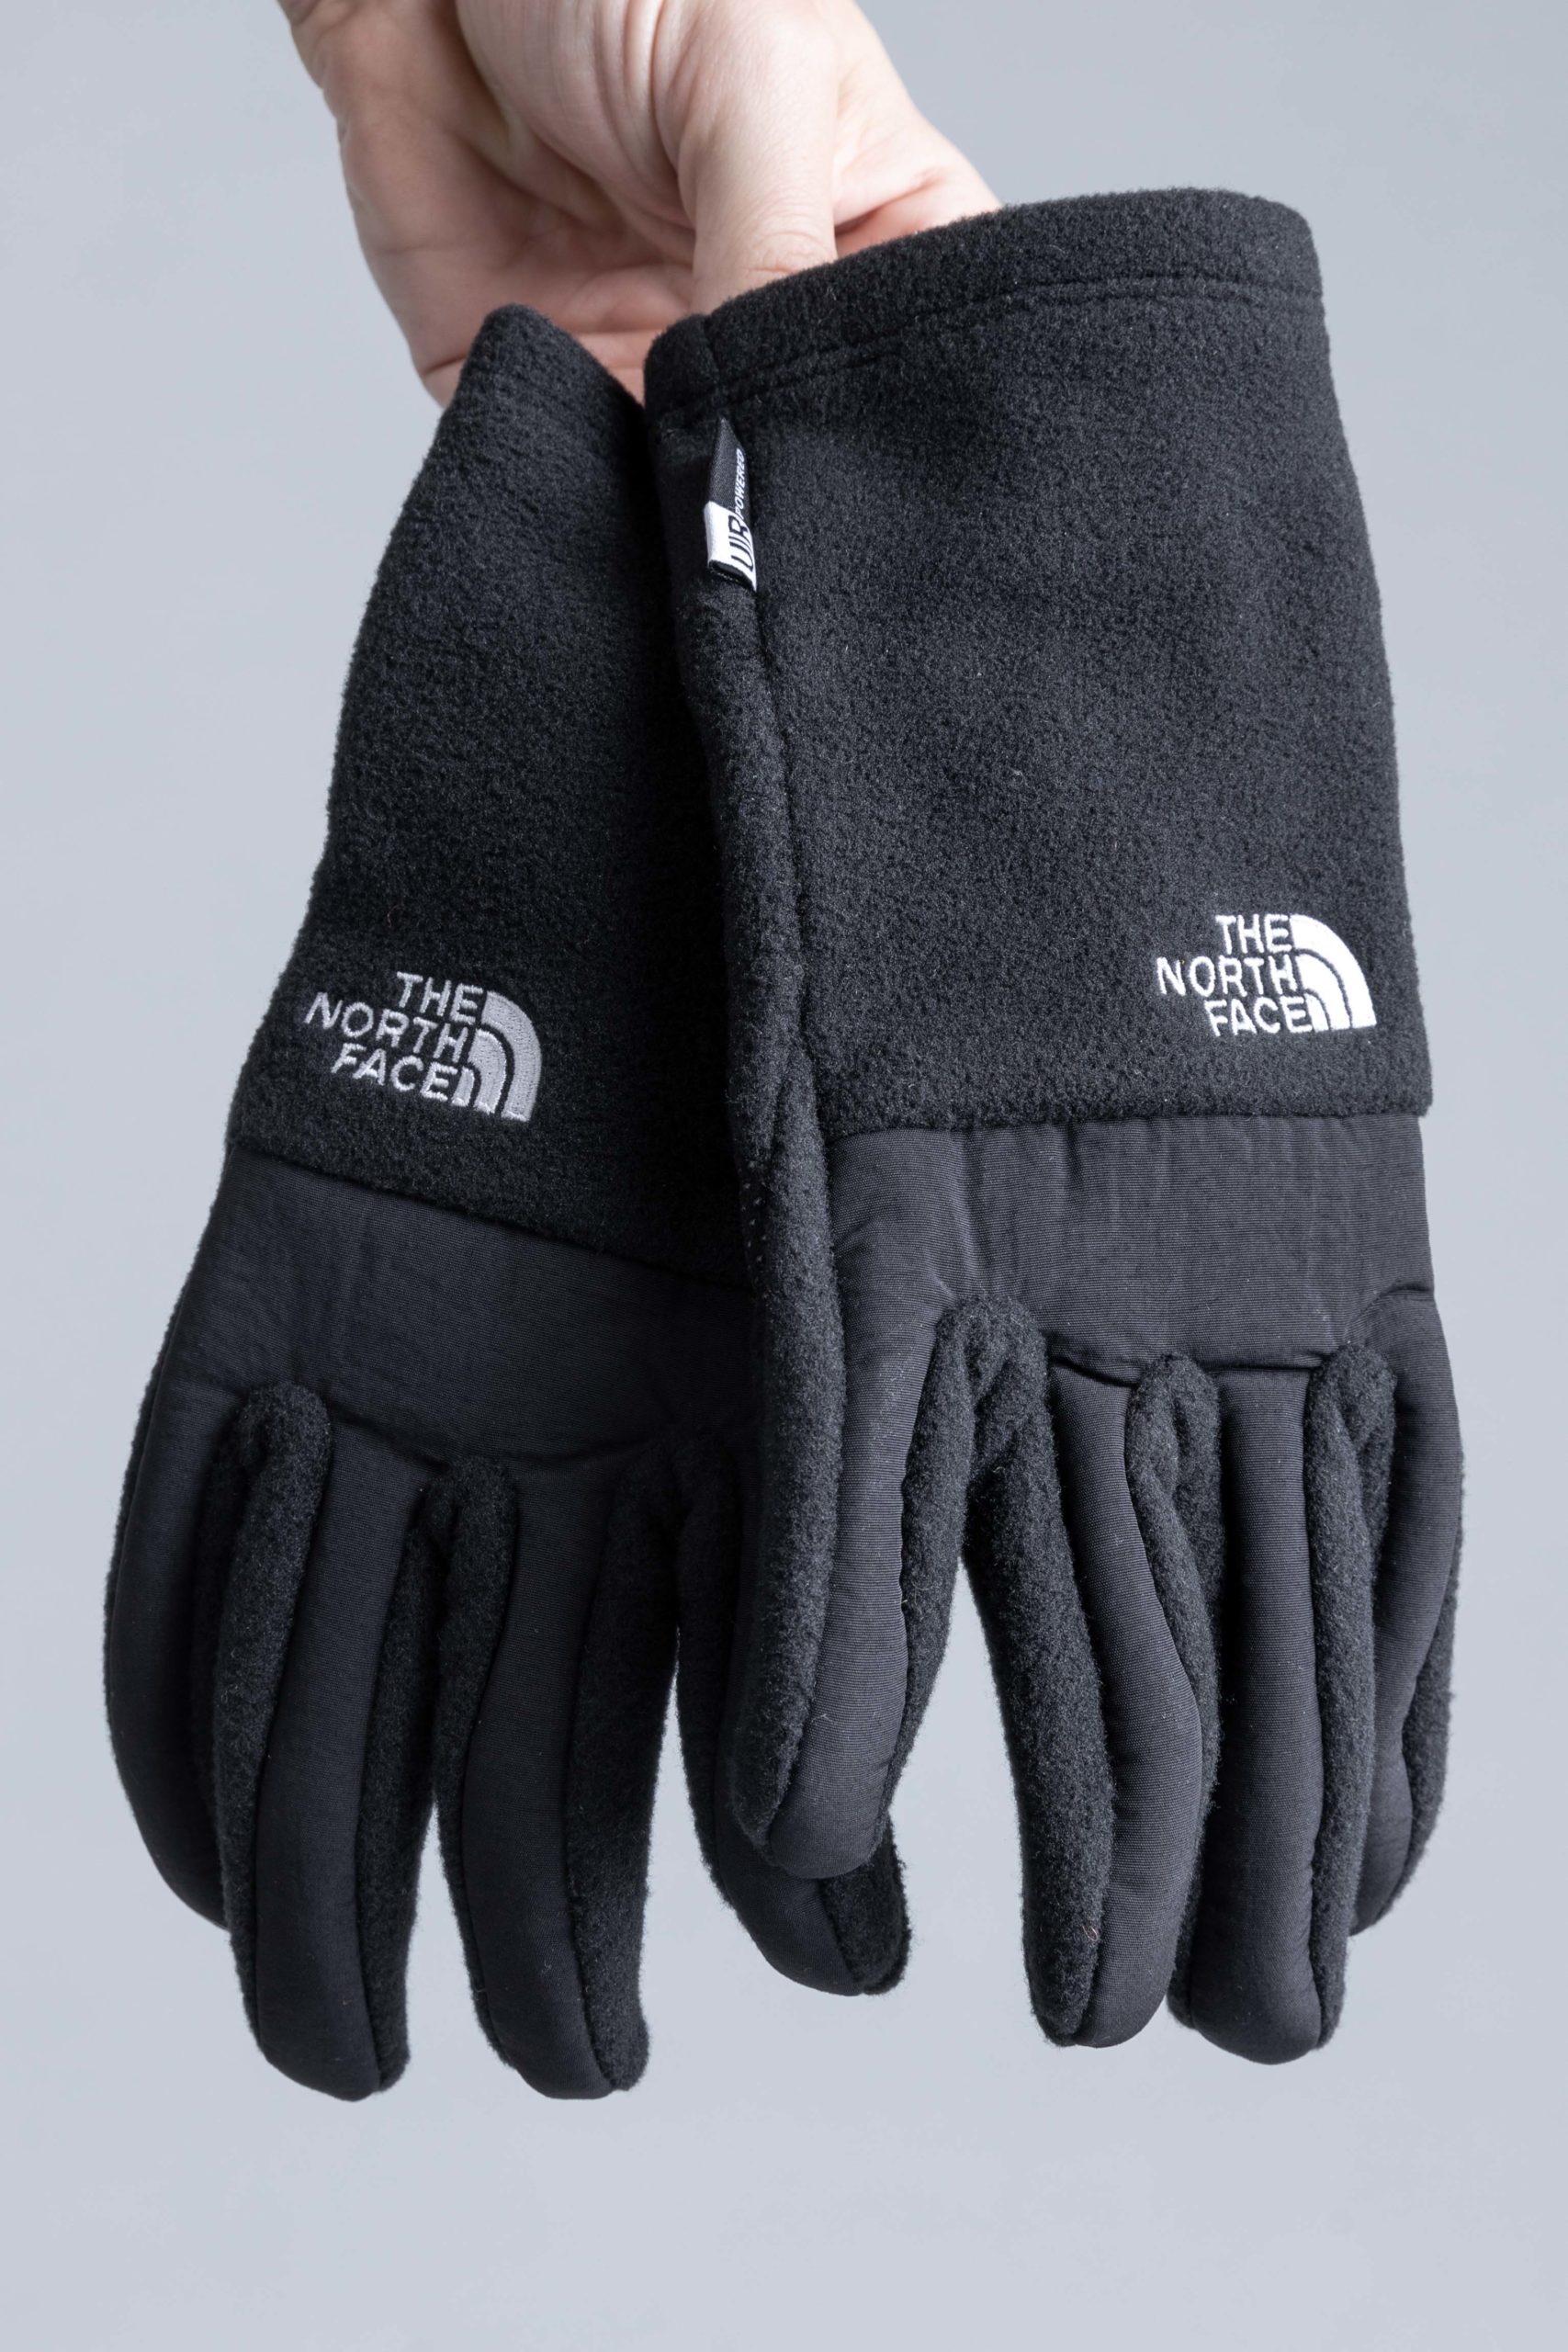 The North Face Denali Etip Glove Black 